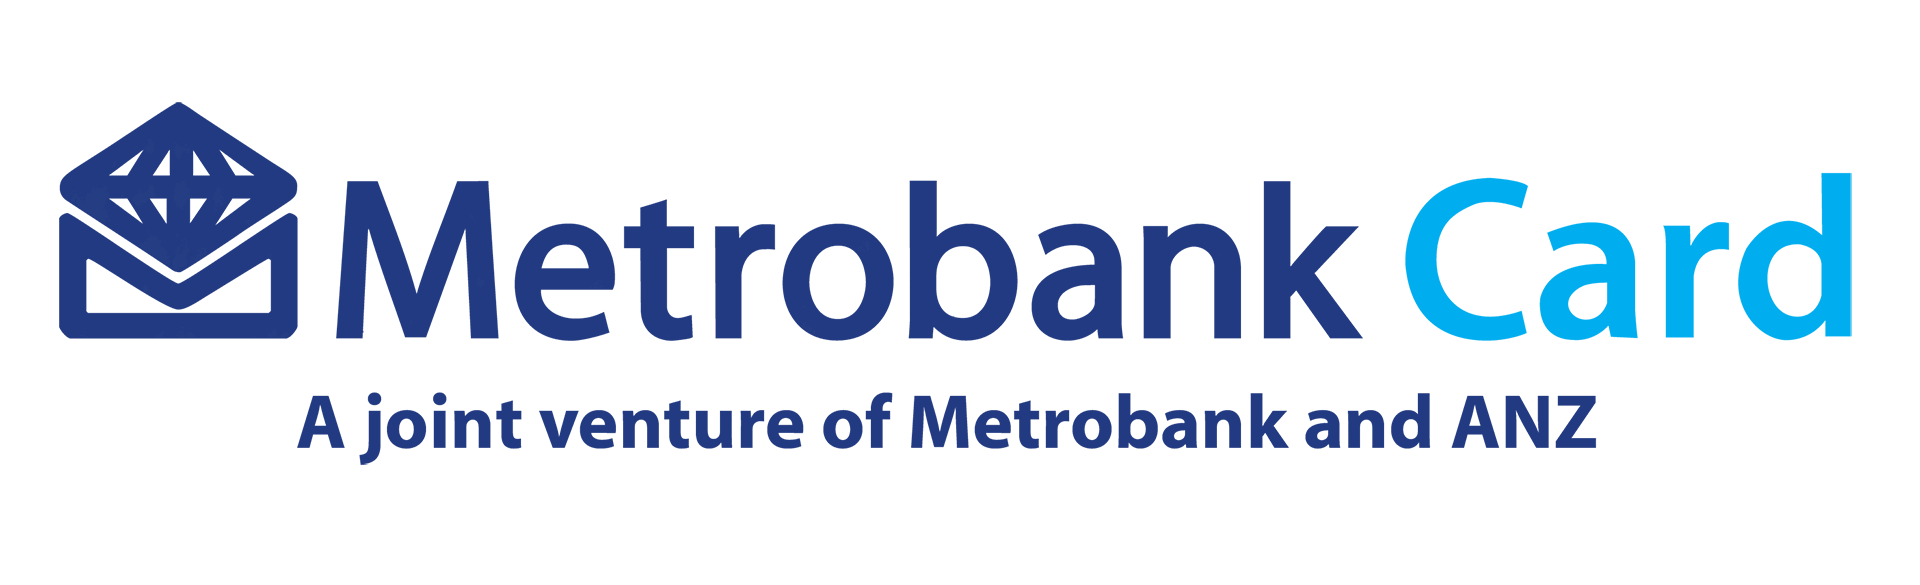 Gt Capital Metropolitan Bank Trust Company Metrobank